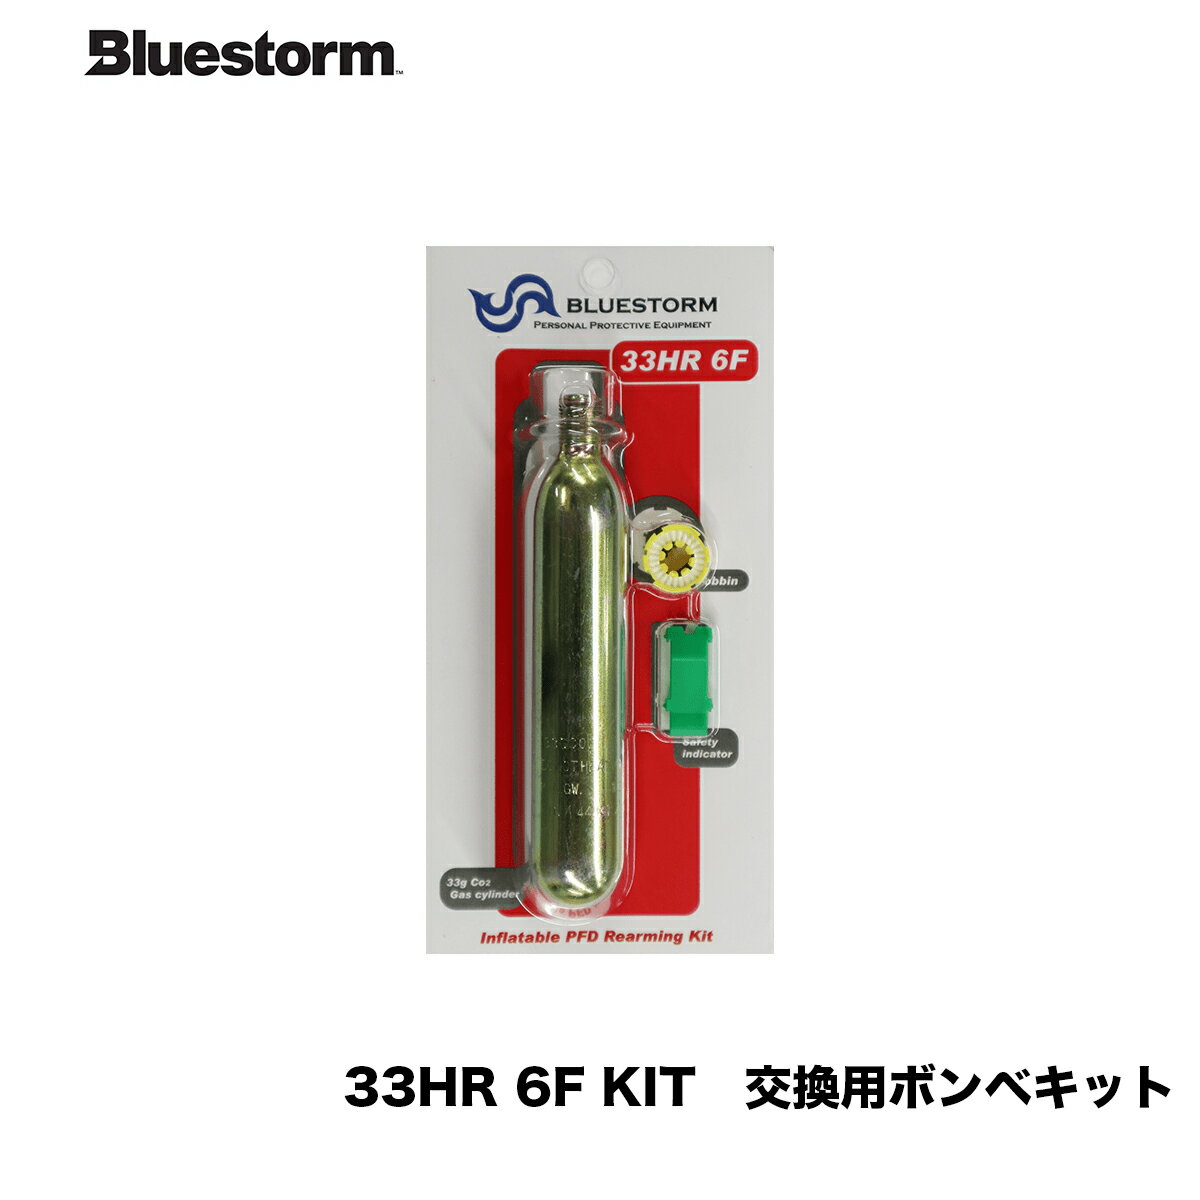 Bluestorm　■33HR 6F KIT [ハルキーロバーツ社製] 　交換用ボンベキット　■高階救命器具　ブルーストーム　Bluestorm